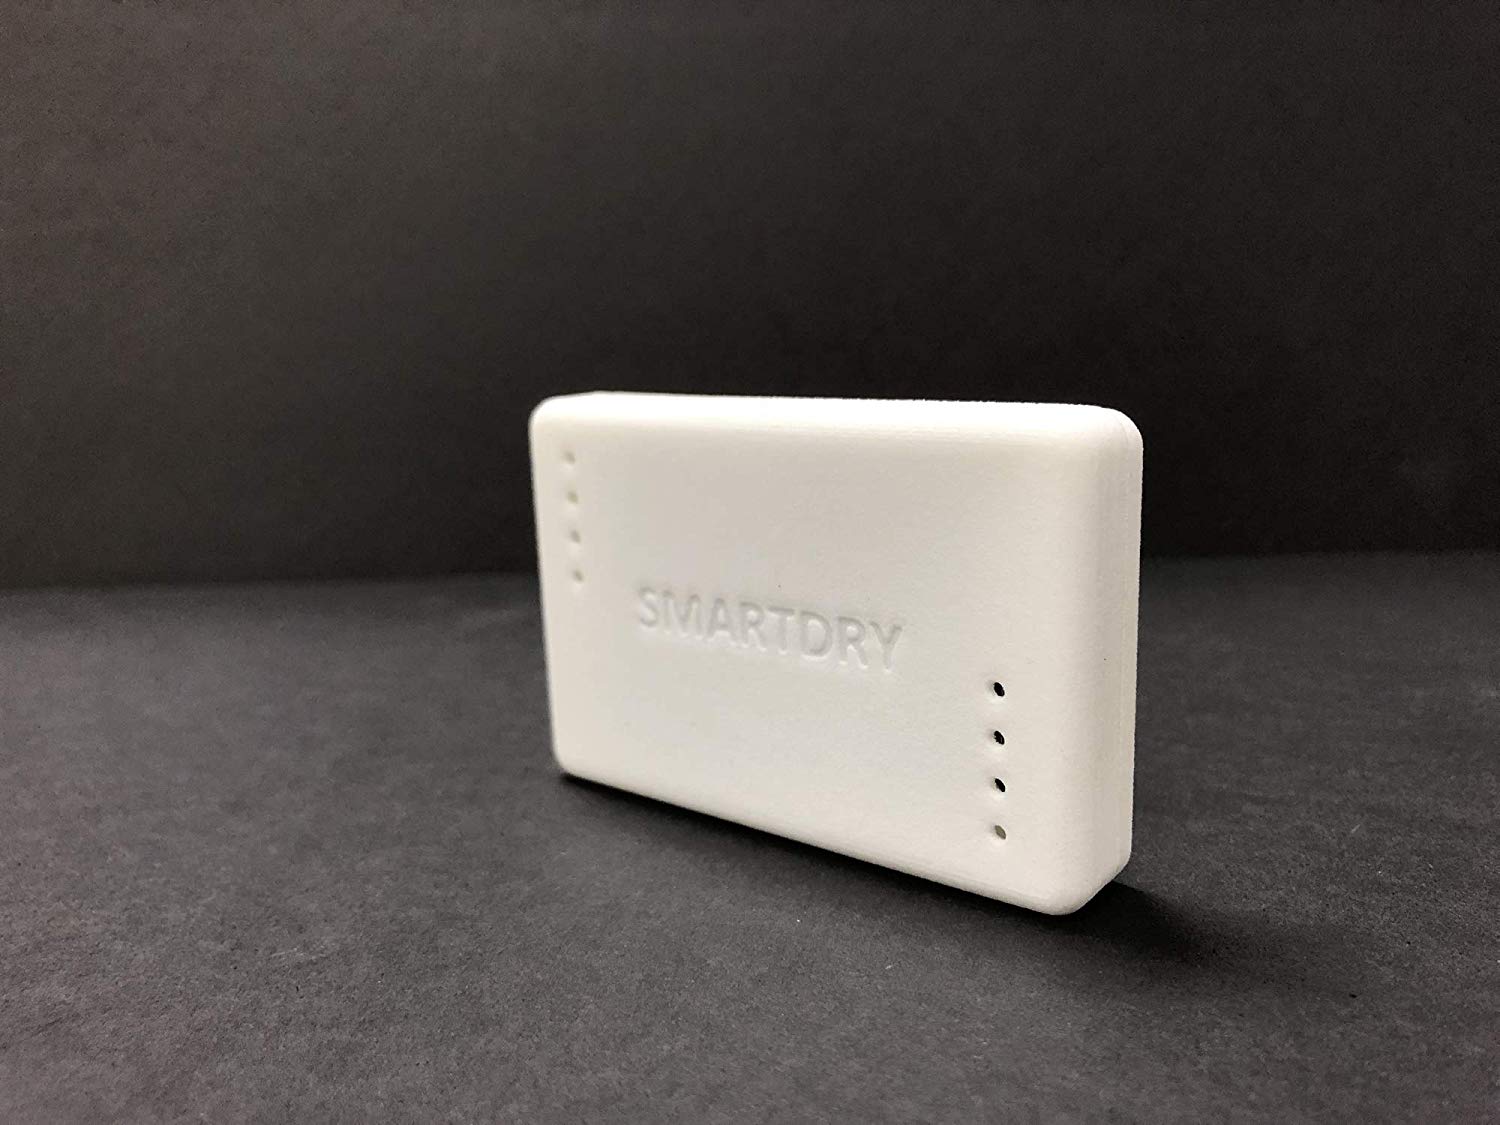 SmartDry Wireless Laundry Sensor and App